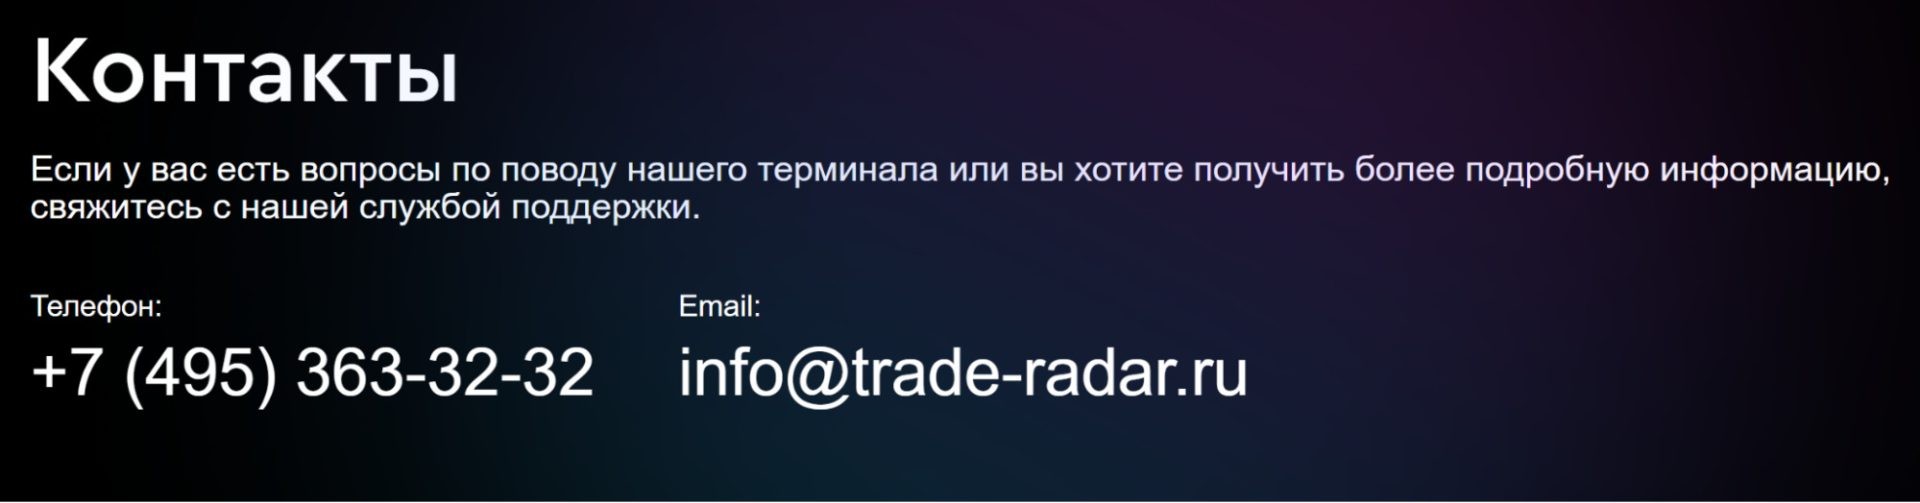 Контакты платформы TradeRadar